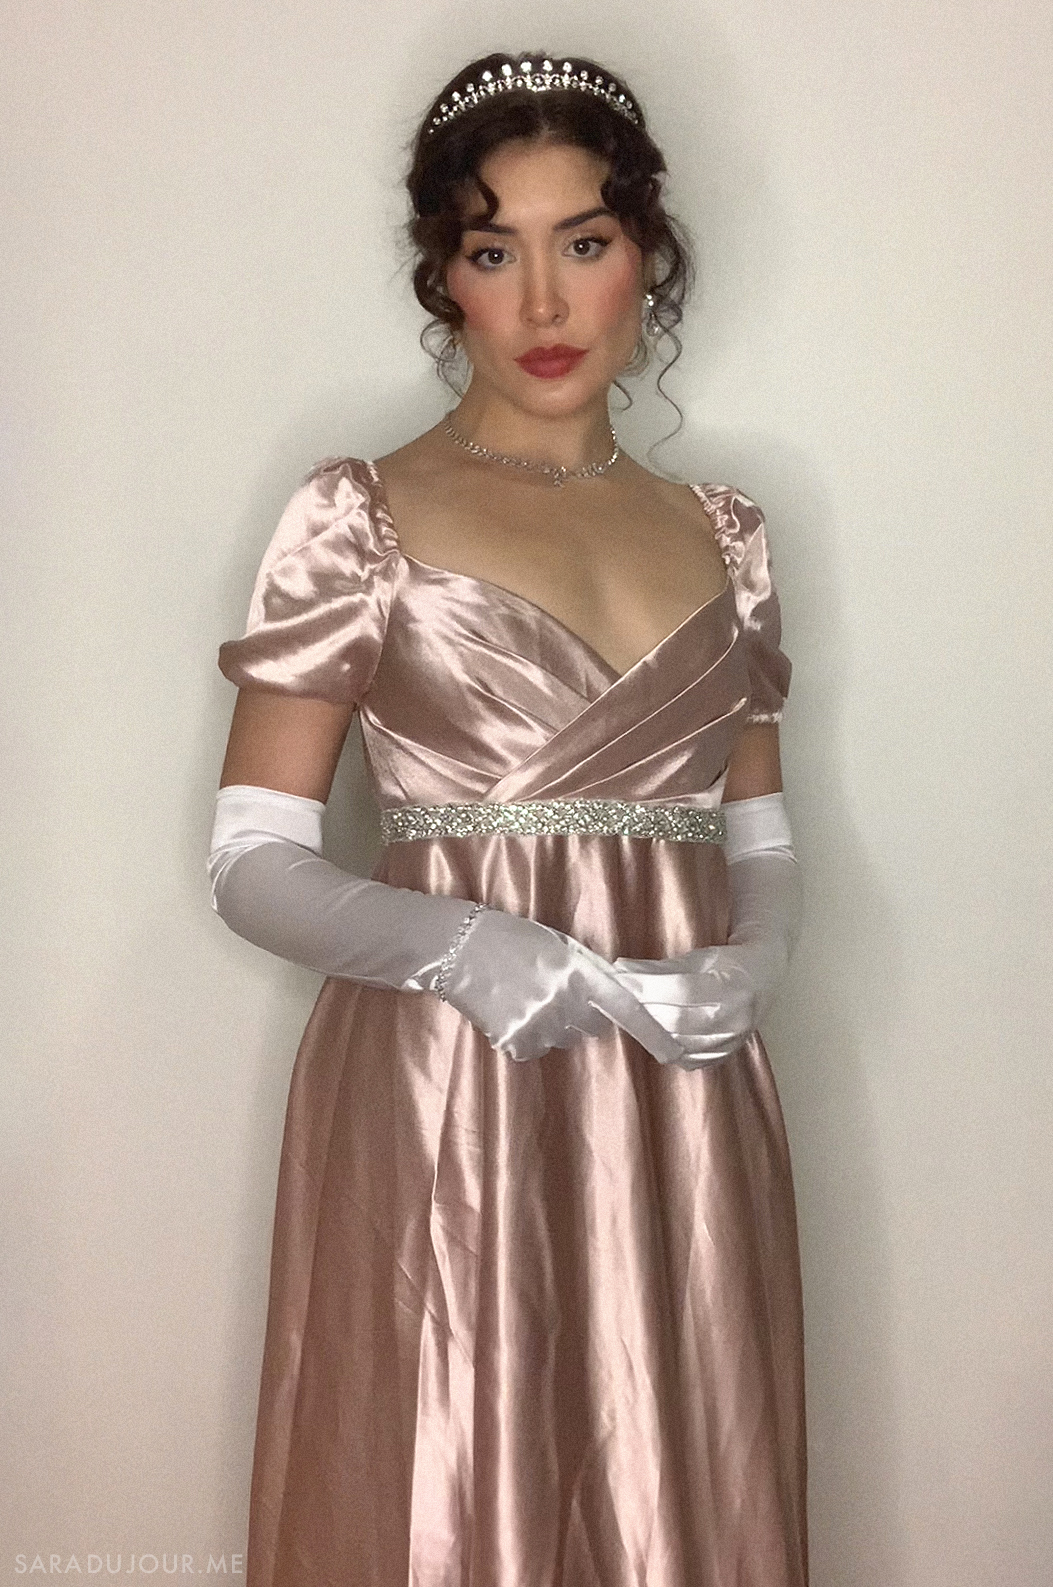 Bridgerton Costume - Regency Ball Style | Sara du Jour